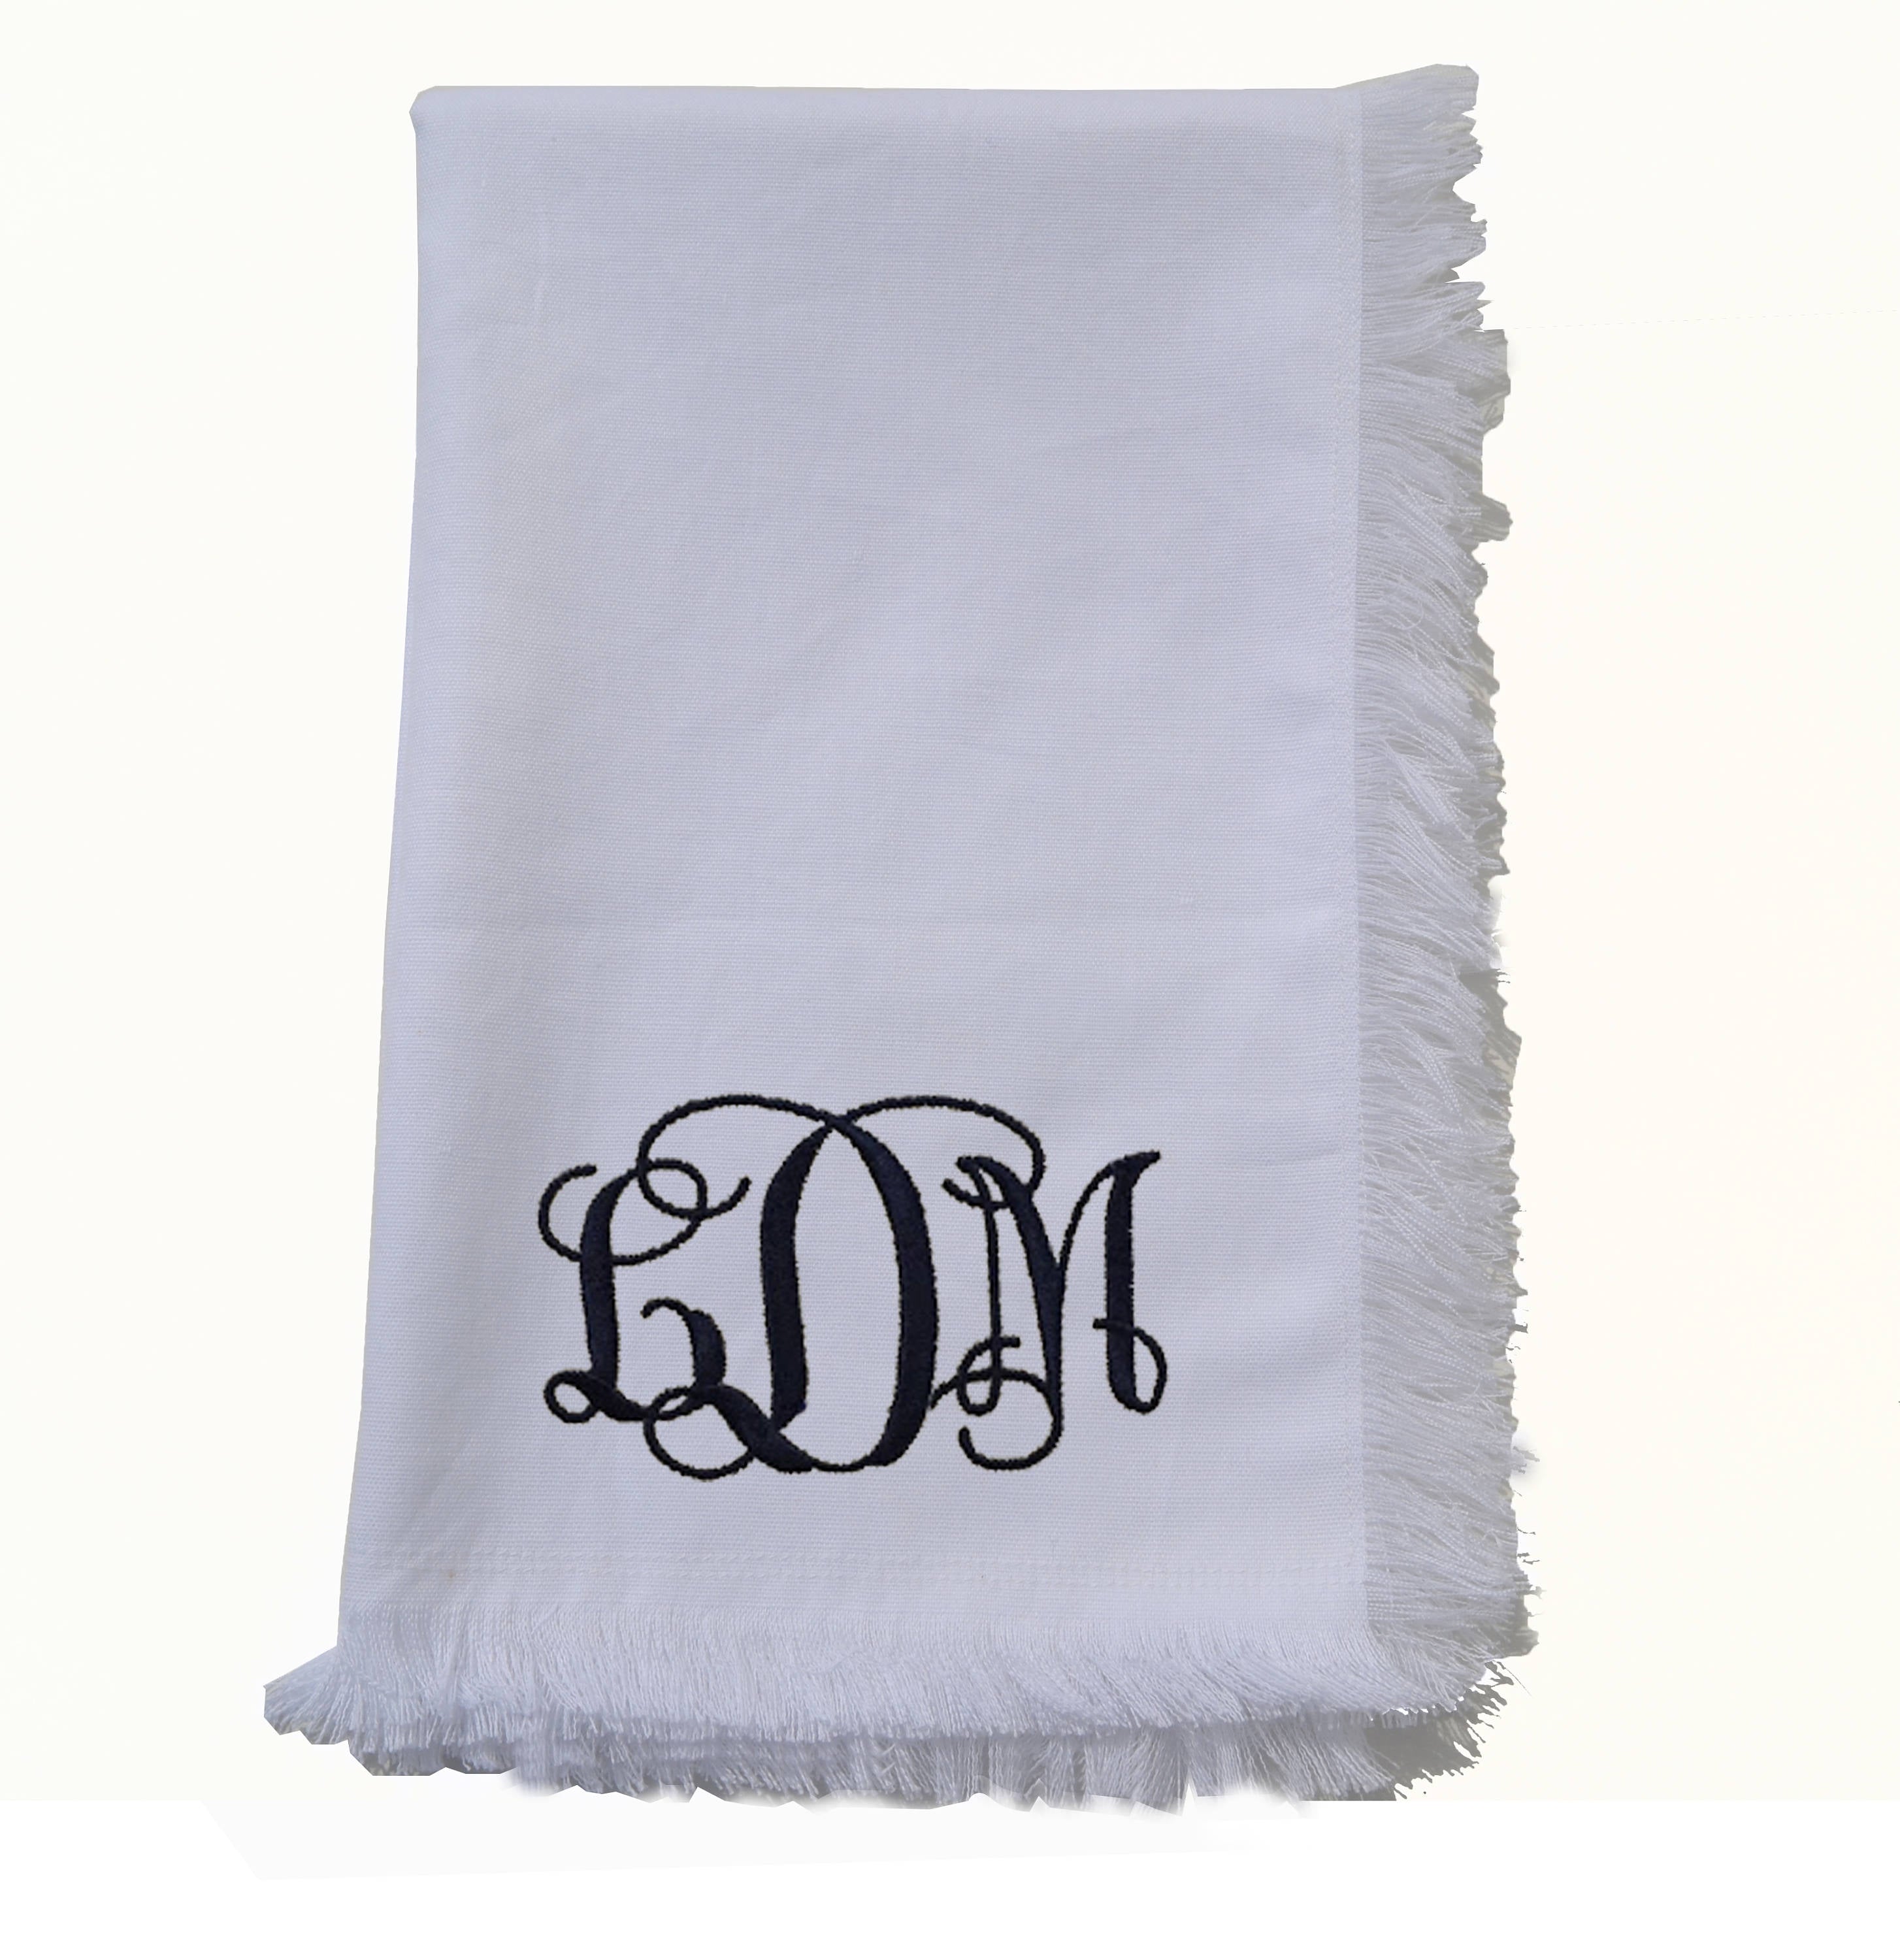 Custom, personalized flour sack towels